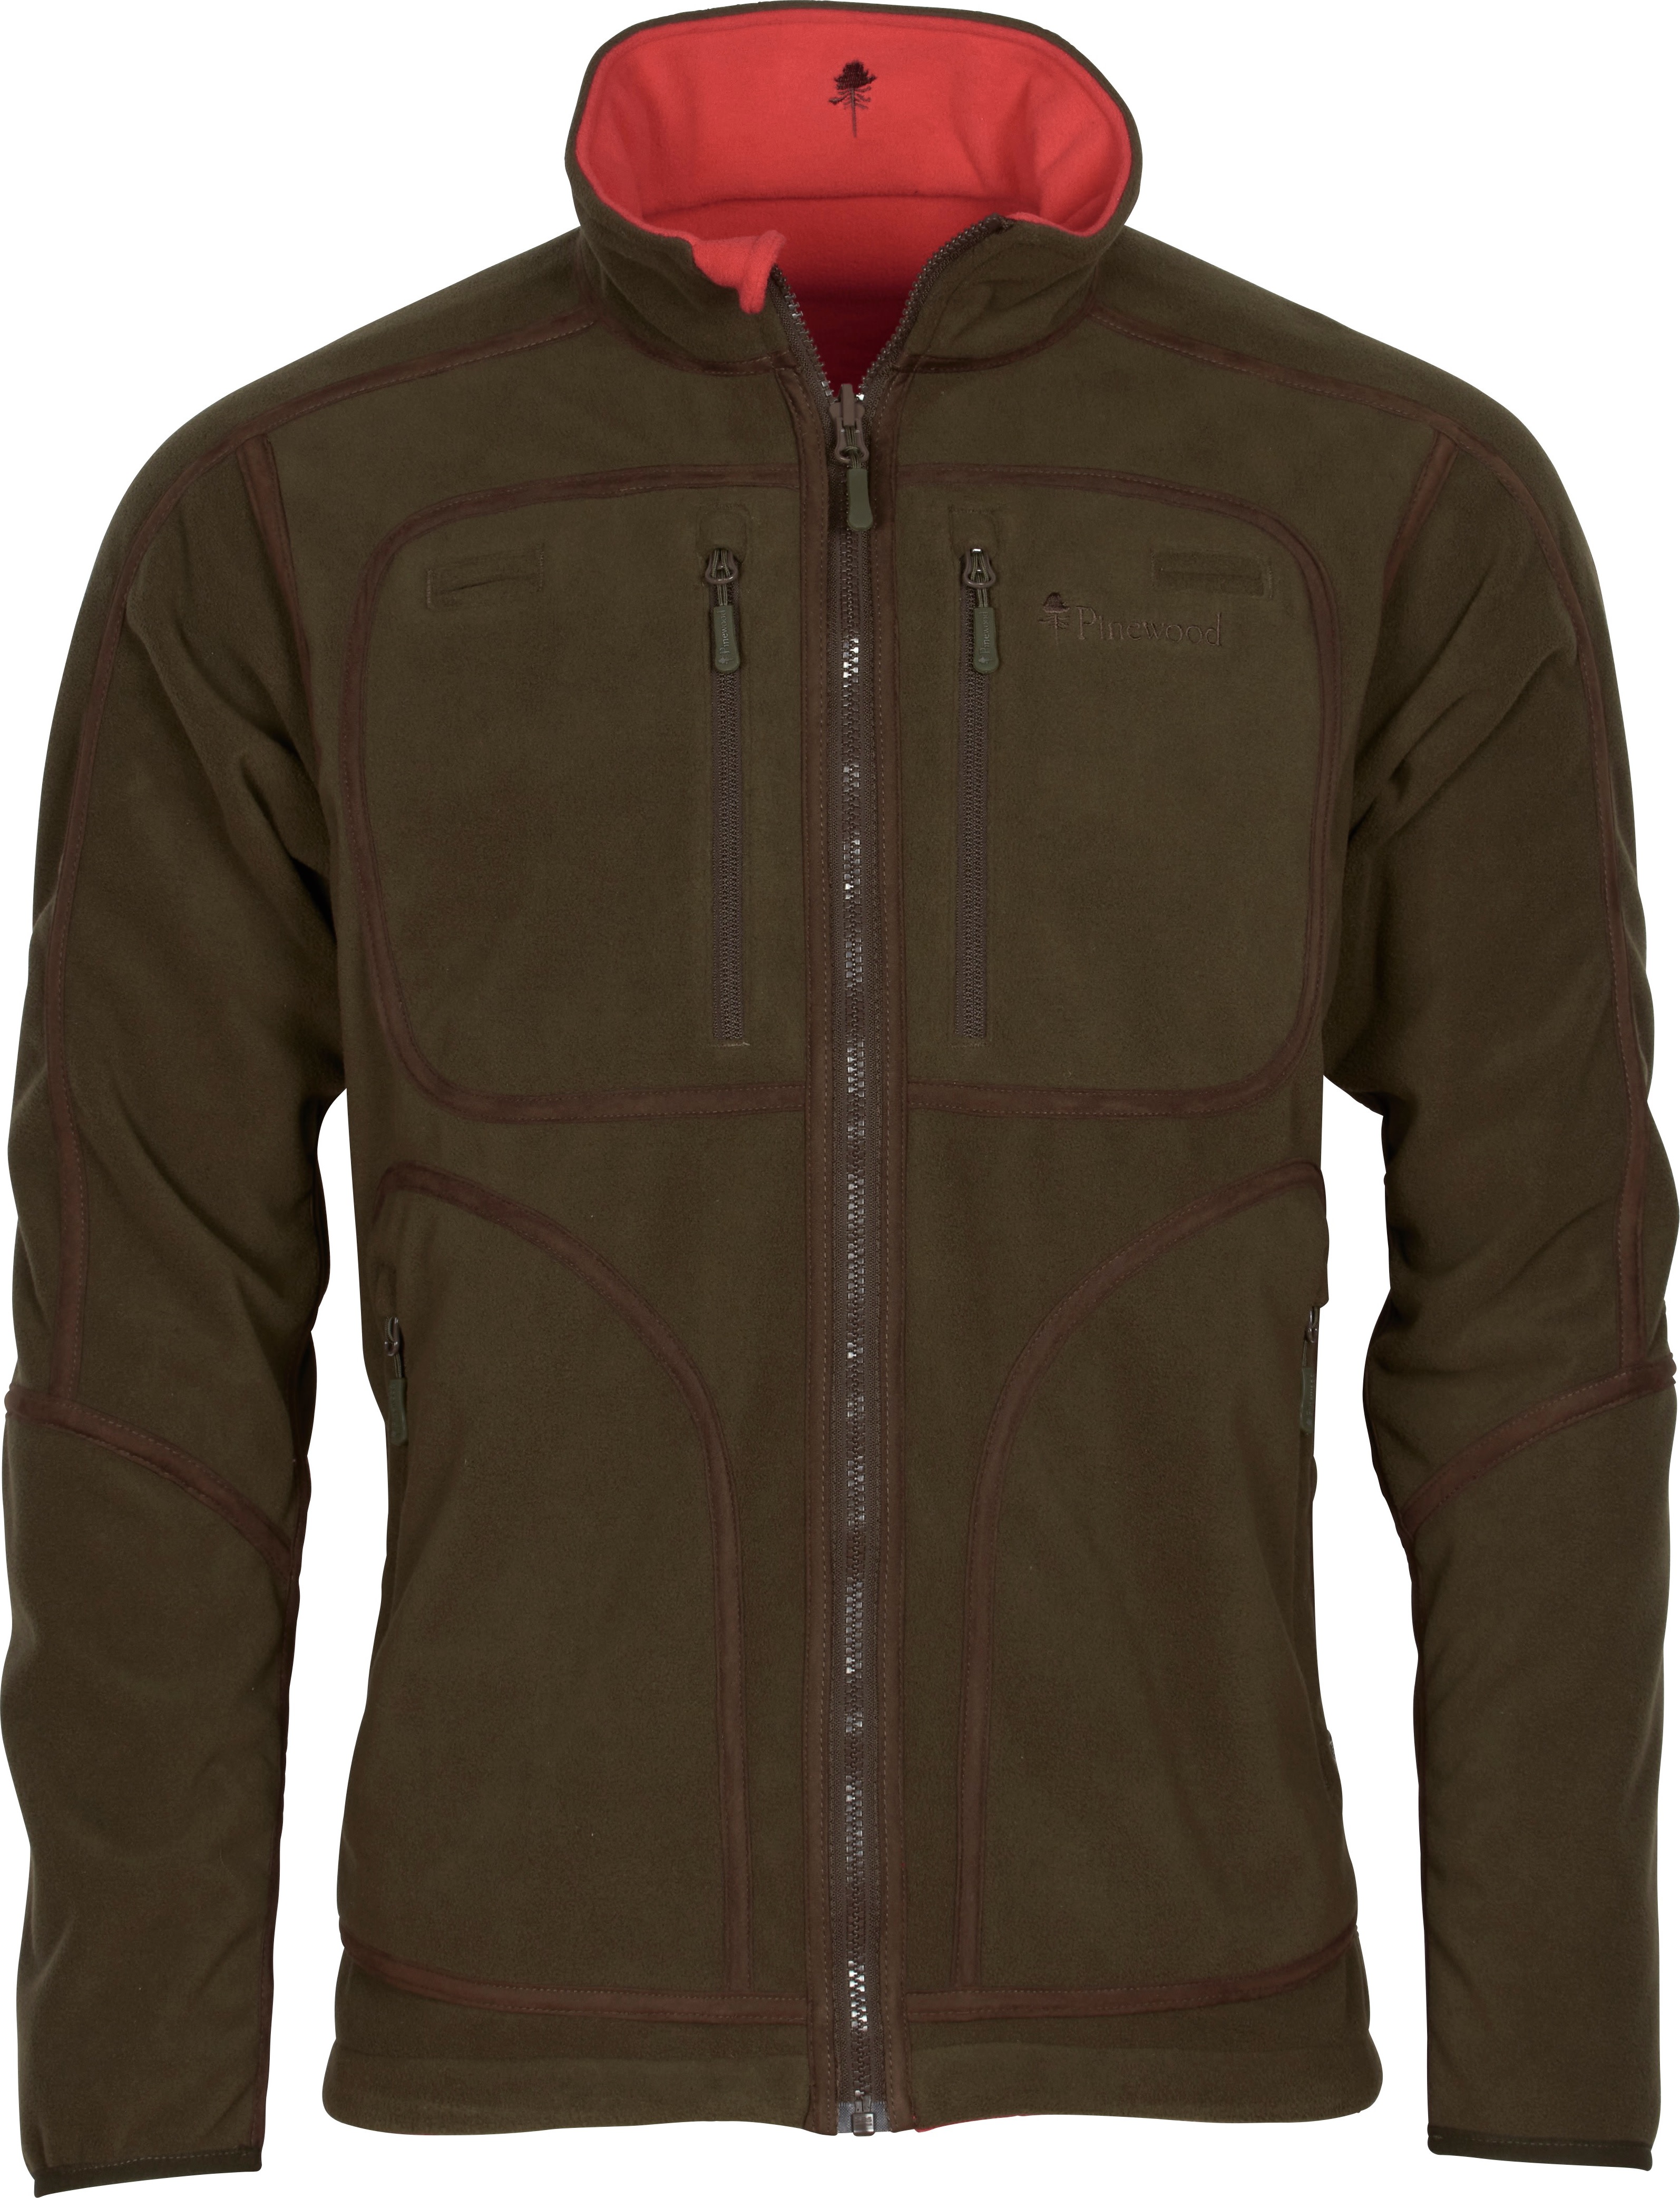 Men’s Furudal Reversible Fleece Jacket H.Brown/Red